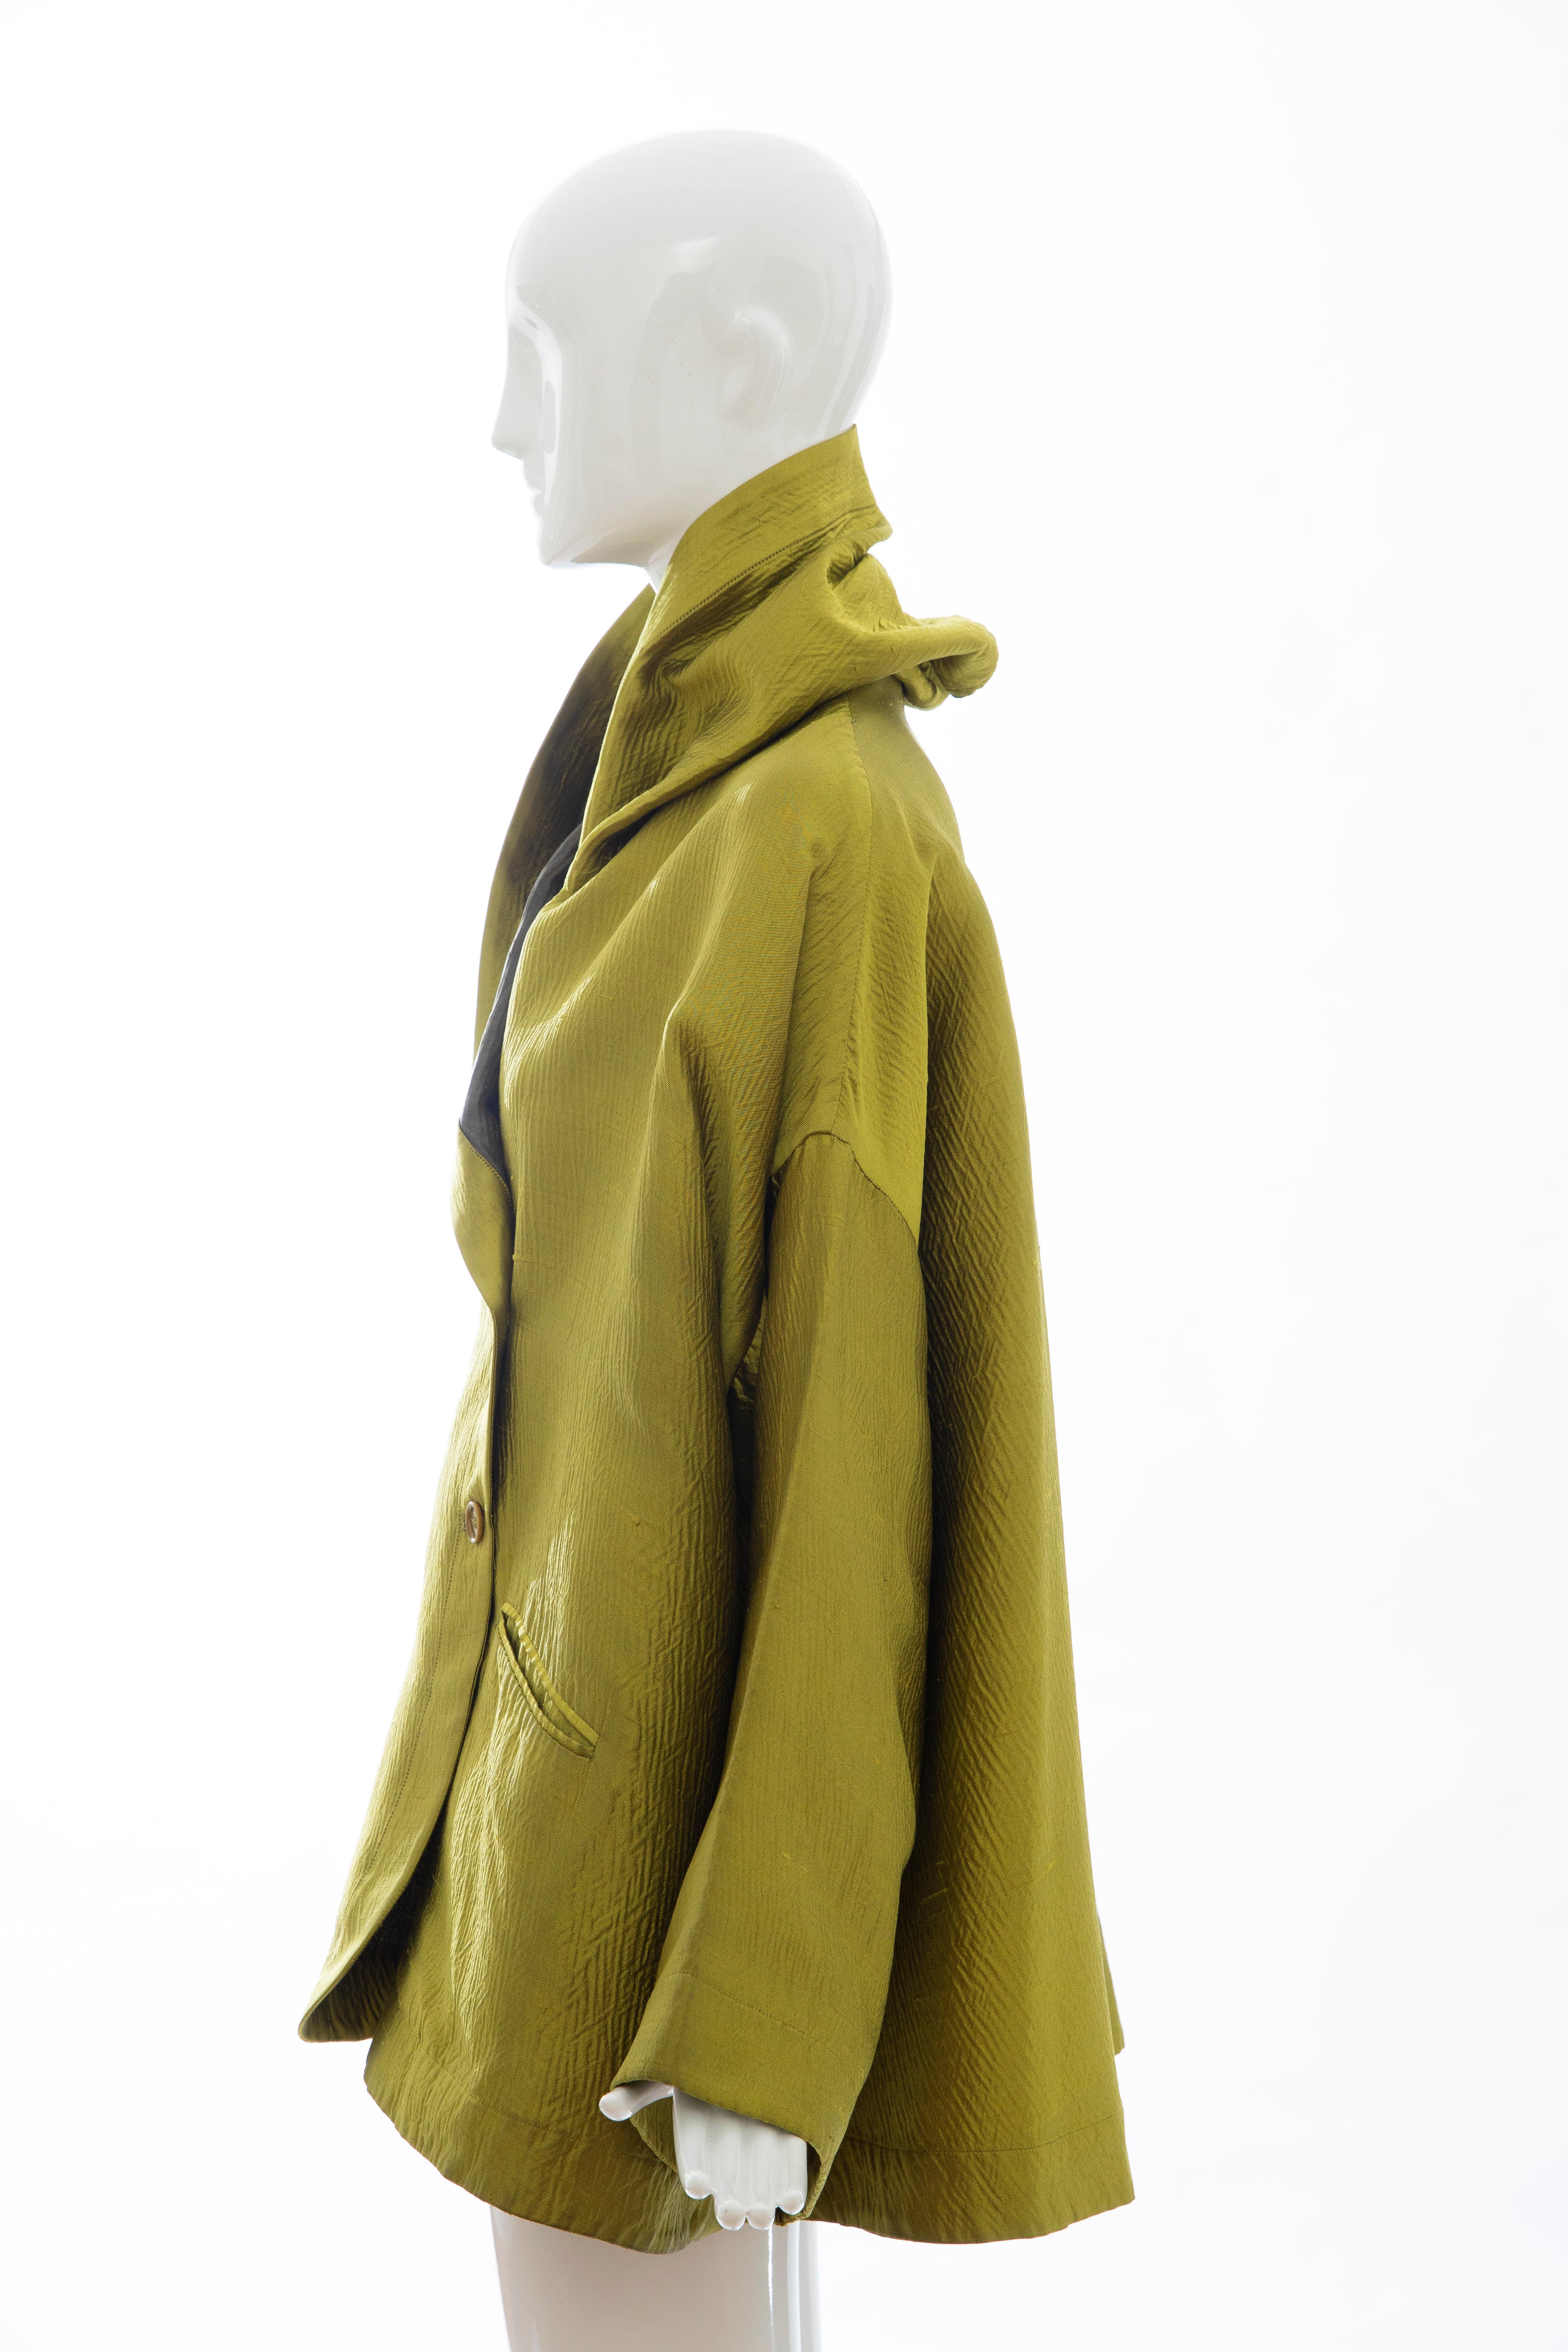 Romeo Gigli Runway Silk Cotton Chartreuse Green Evening Jacket, Fall 1991 7